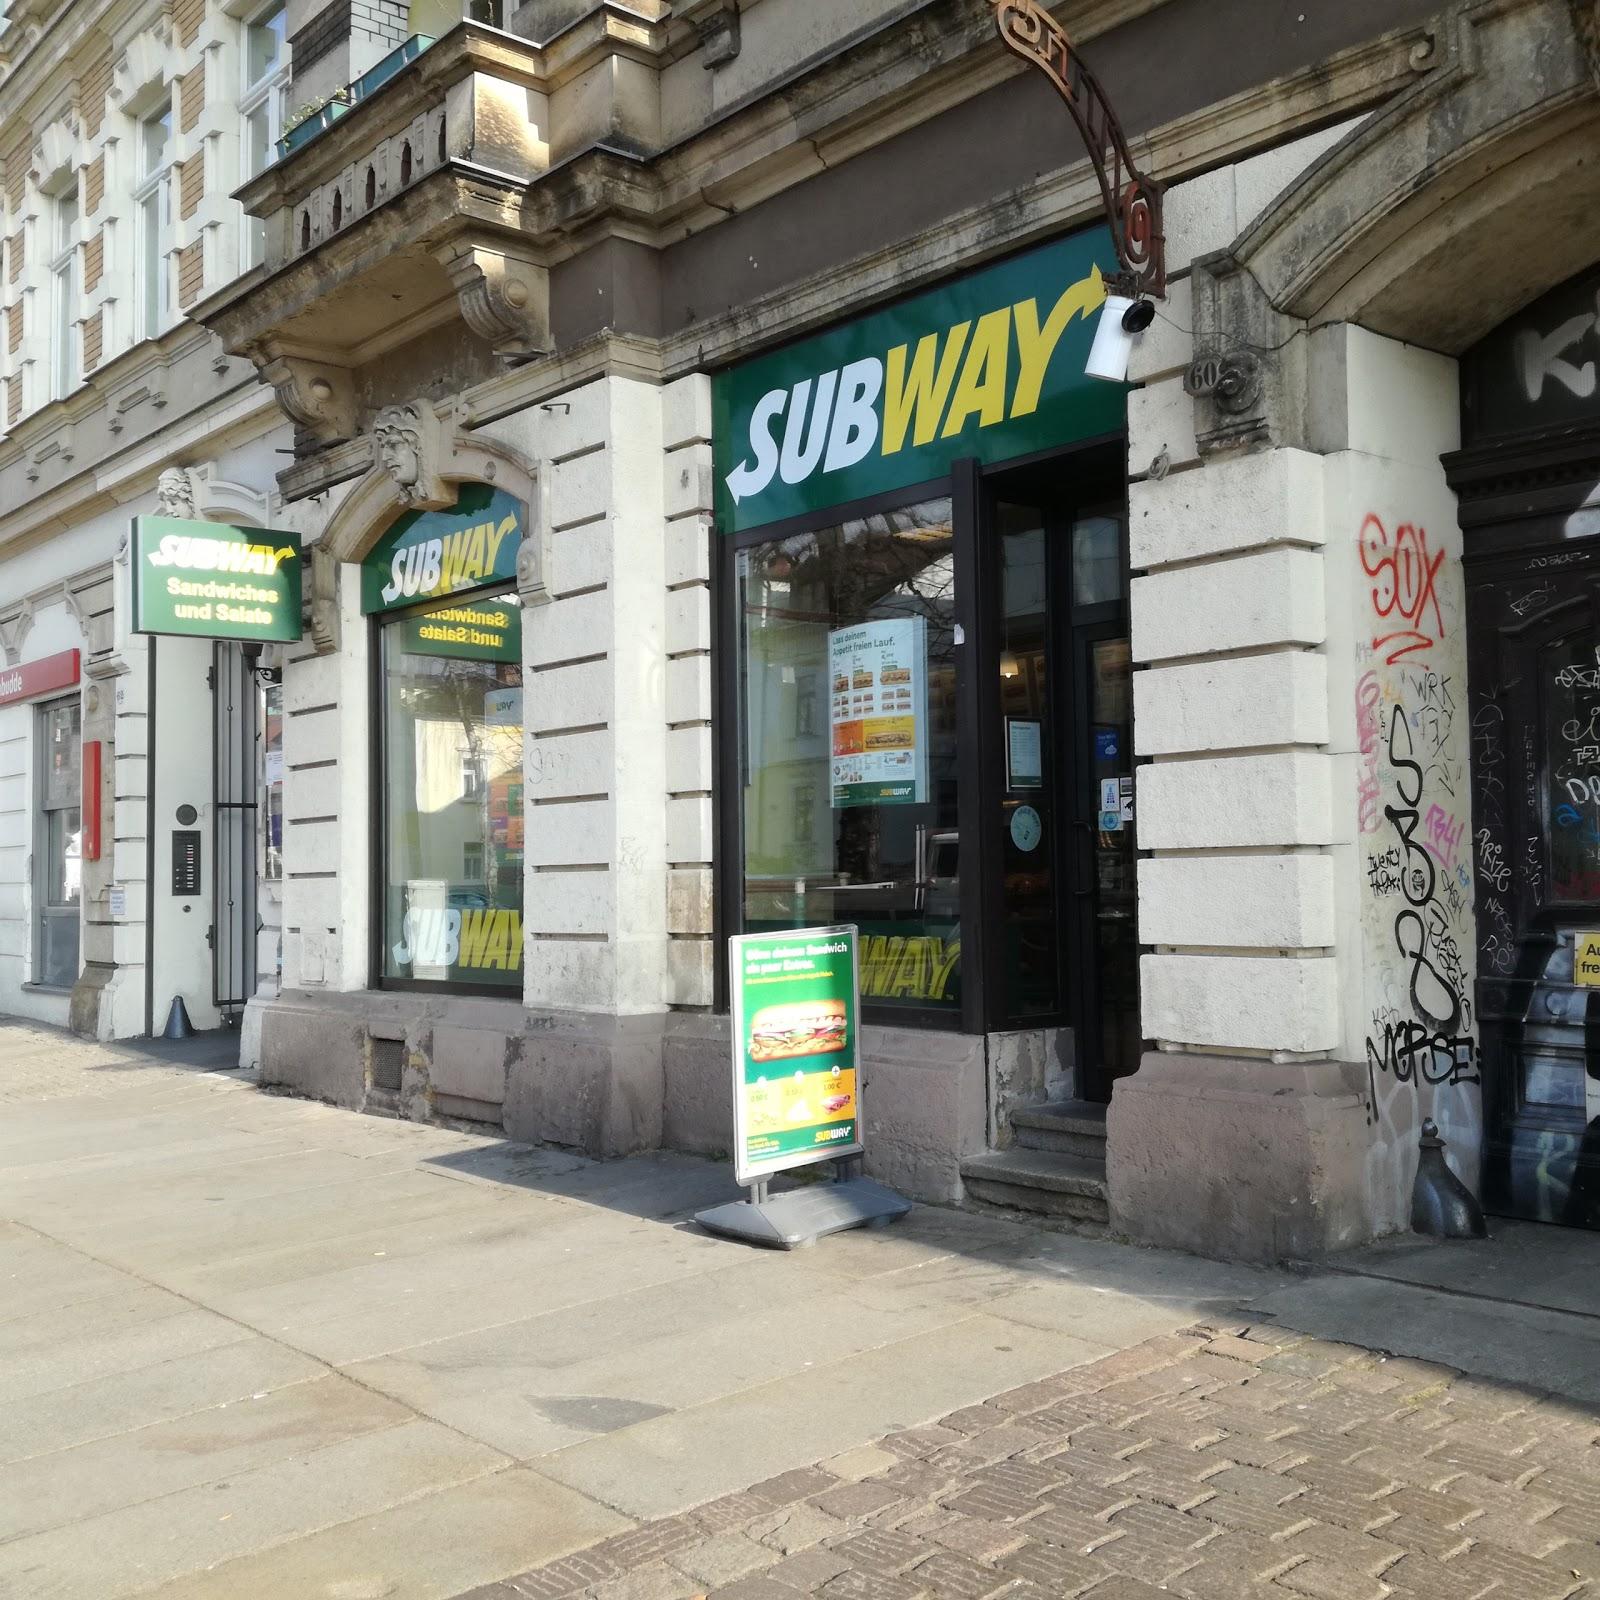 Restaurant "Subway" in Dresden